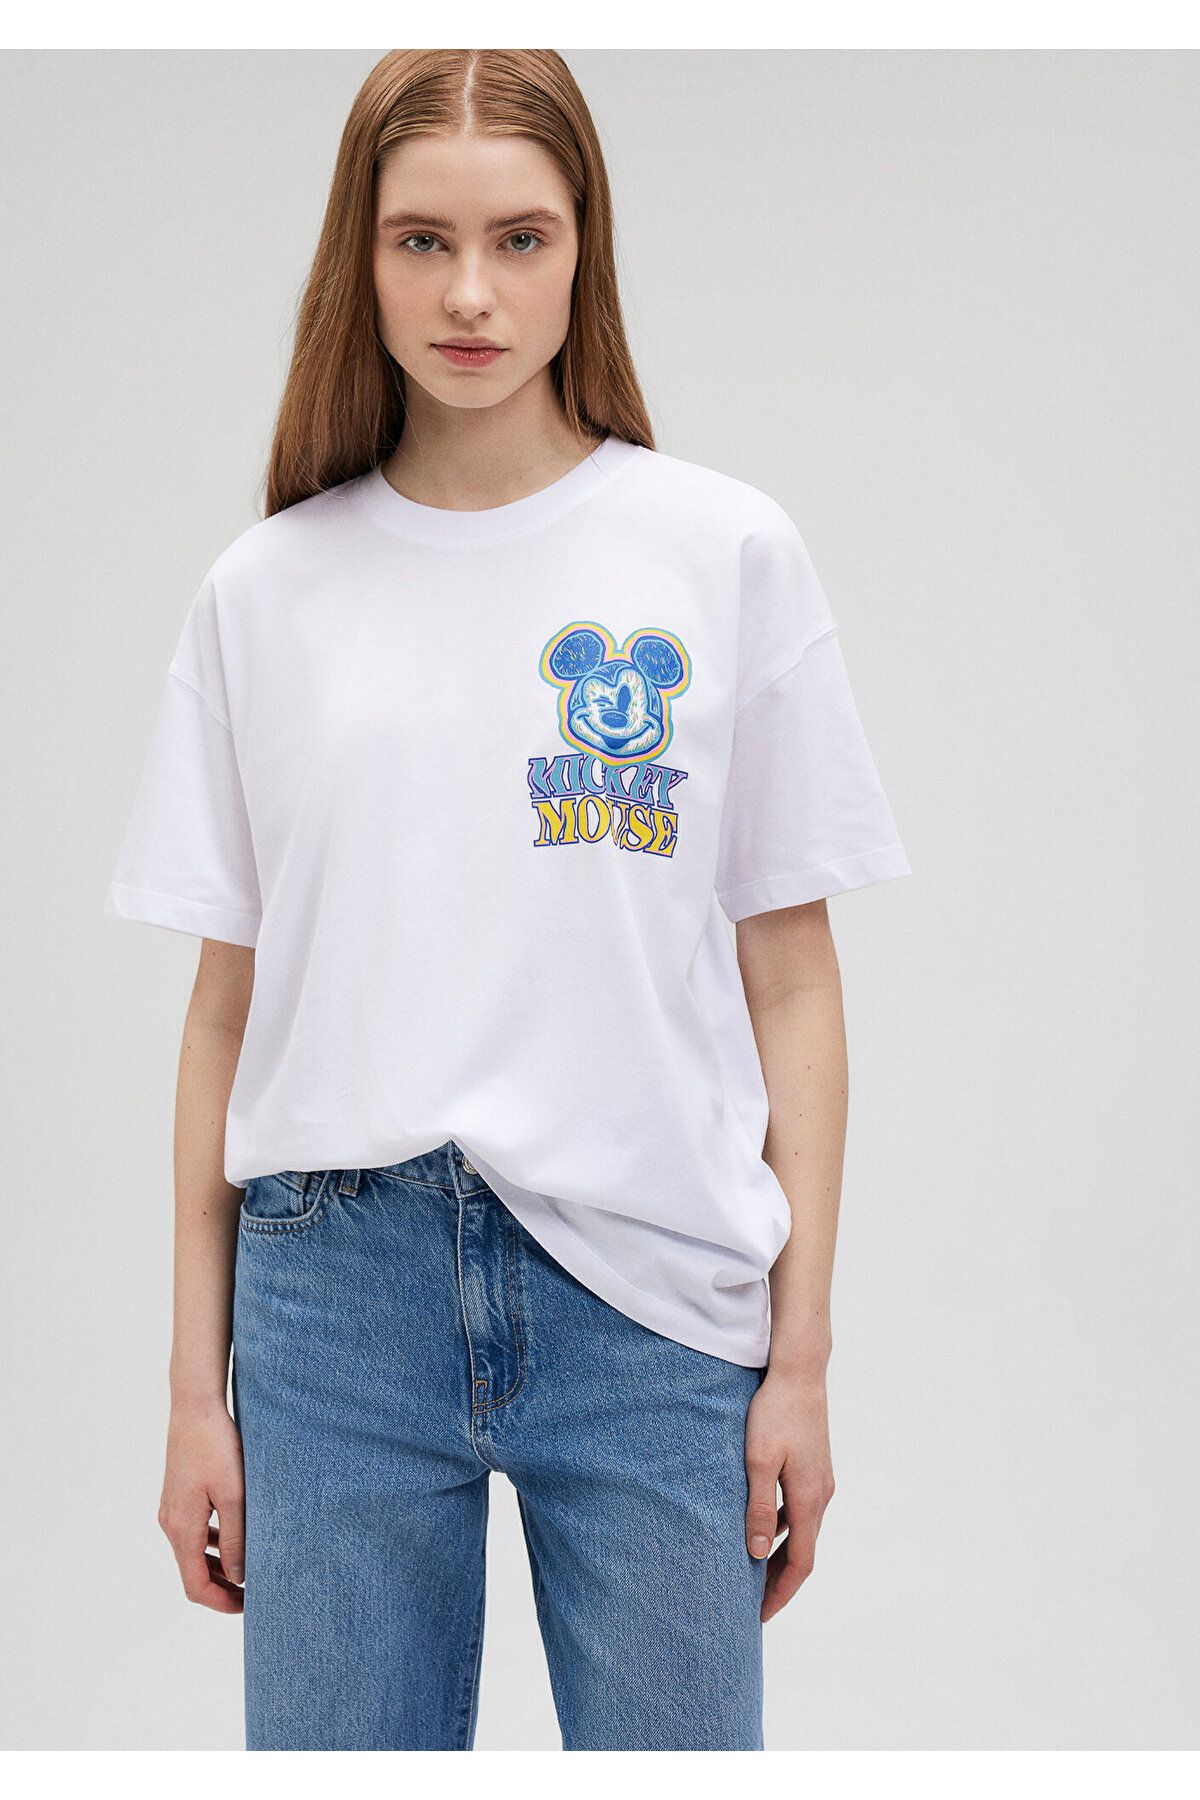 Mavi Mickey Mouse Baskılı Beyaz Tişört Loose Fit / Bol Rahat Kesim 1612473-620